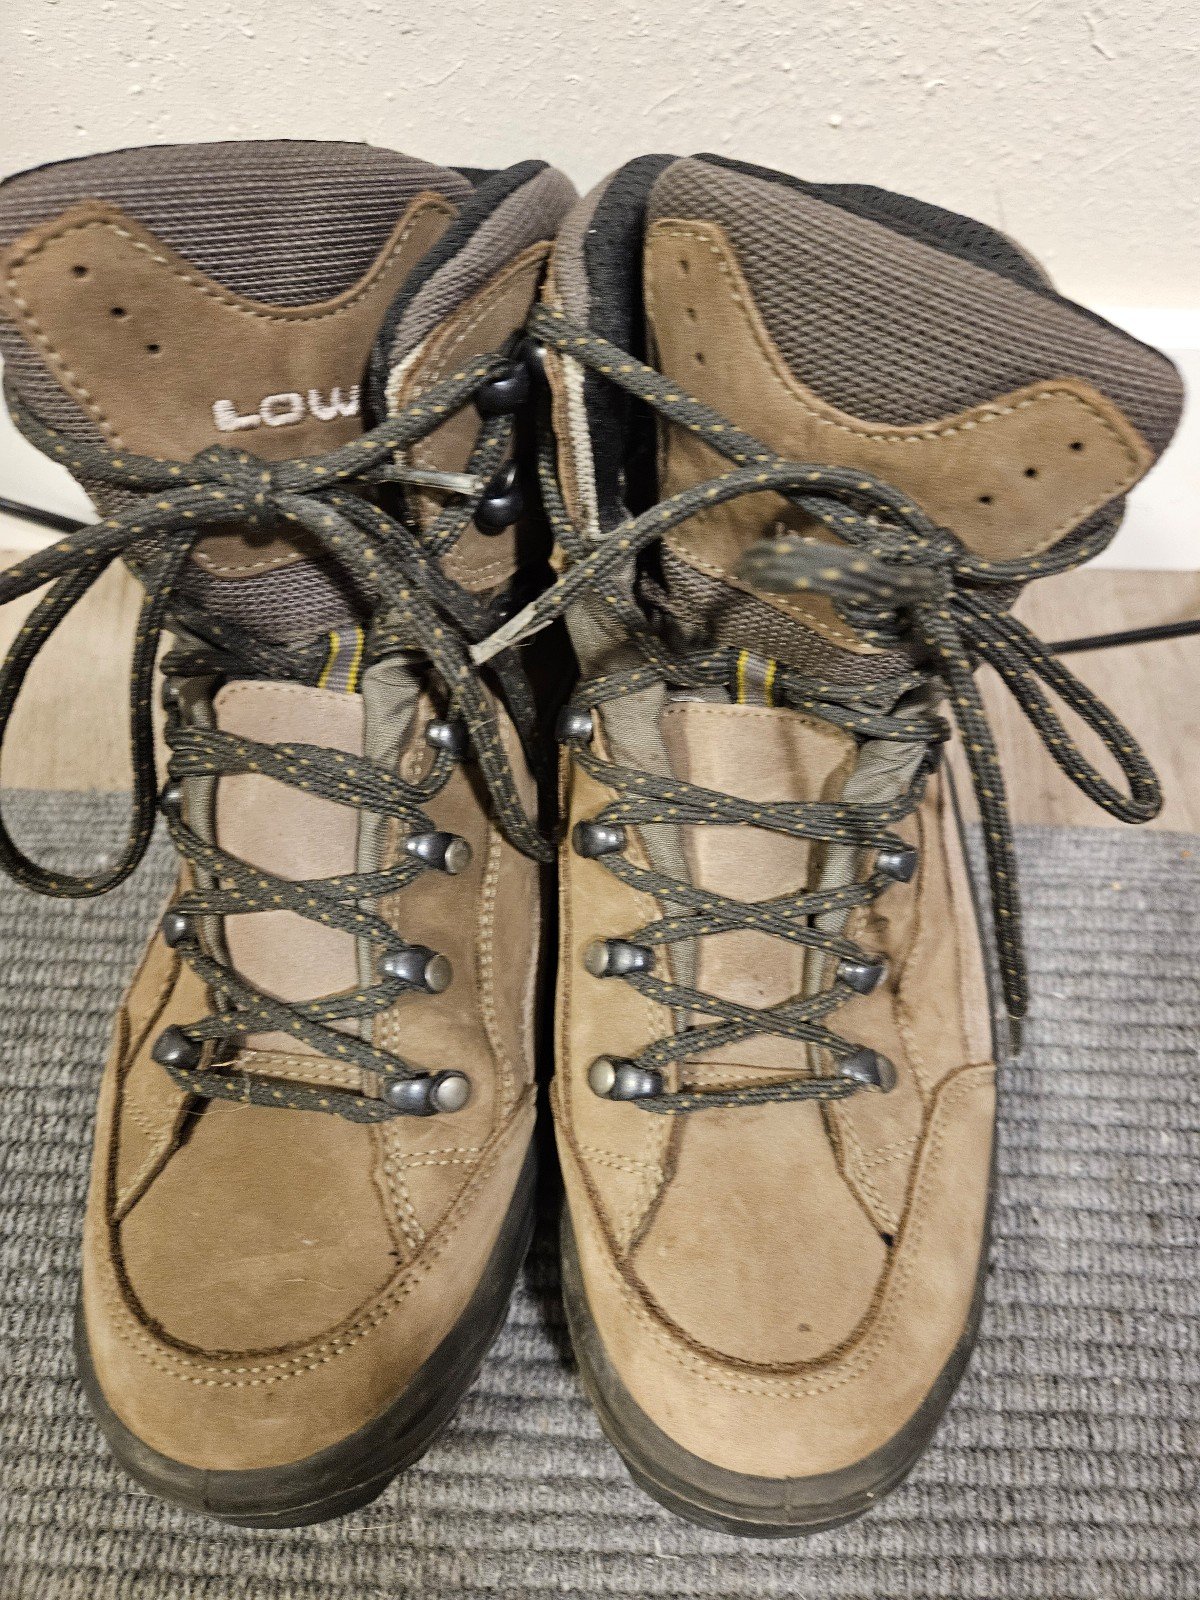 Lowa RenegadesRenegade GTX Mid Hiking Boots - Wide eu8EbrBgP